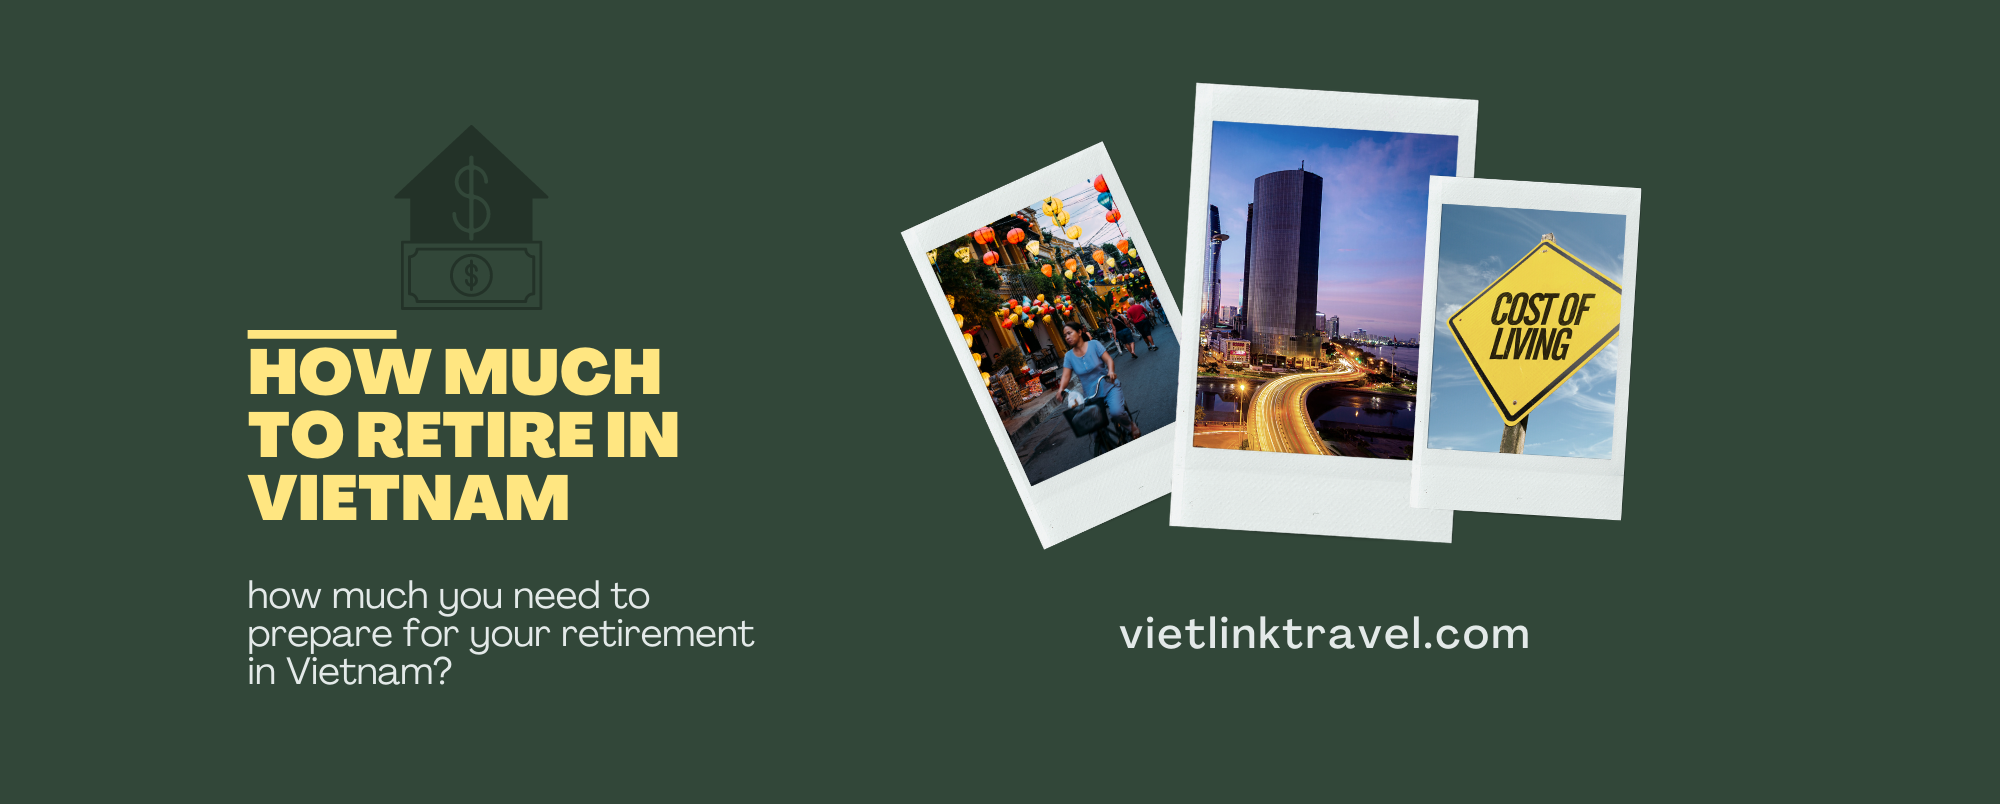 Getting a visa for retirement in Vietnam